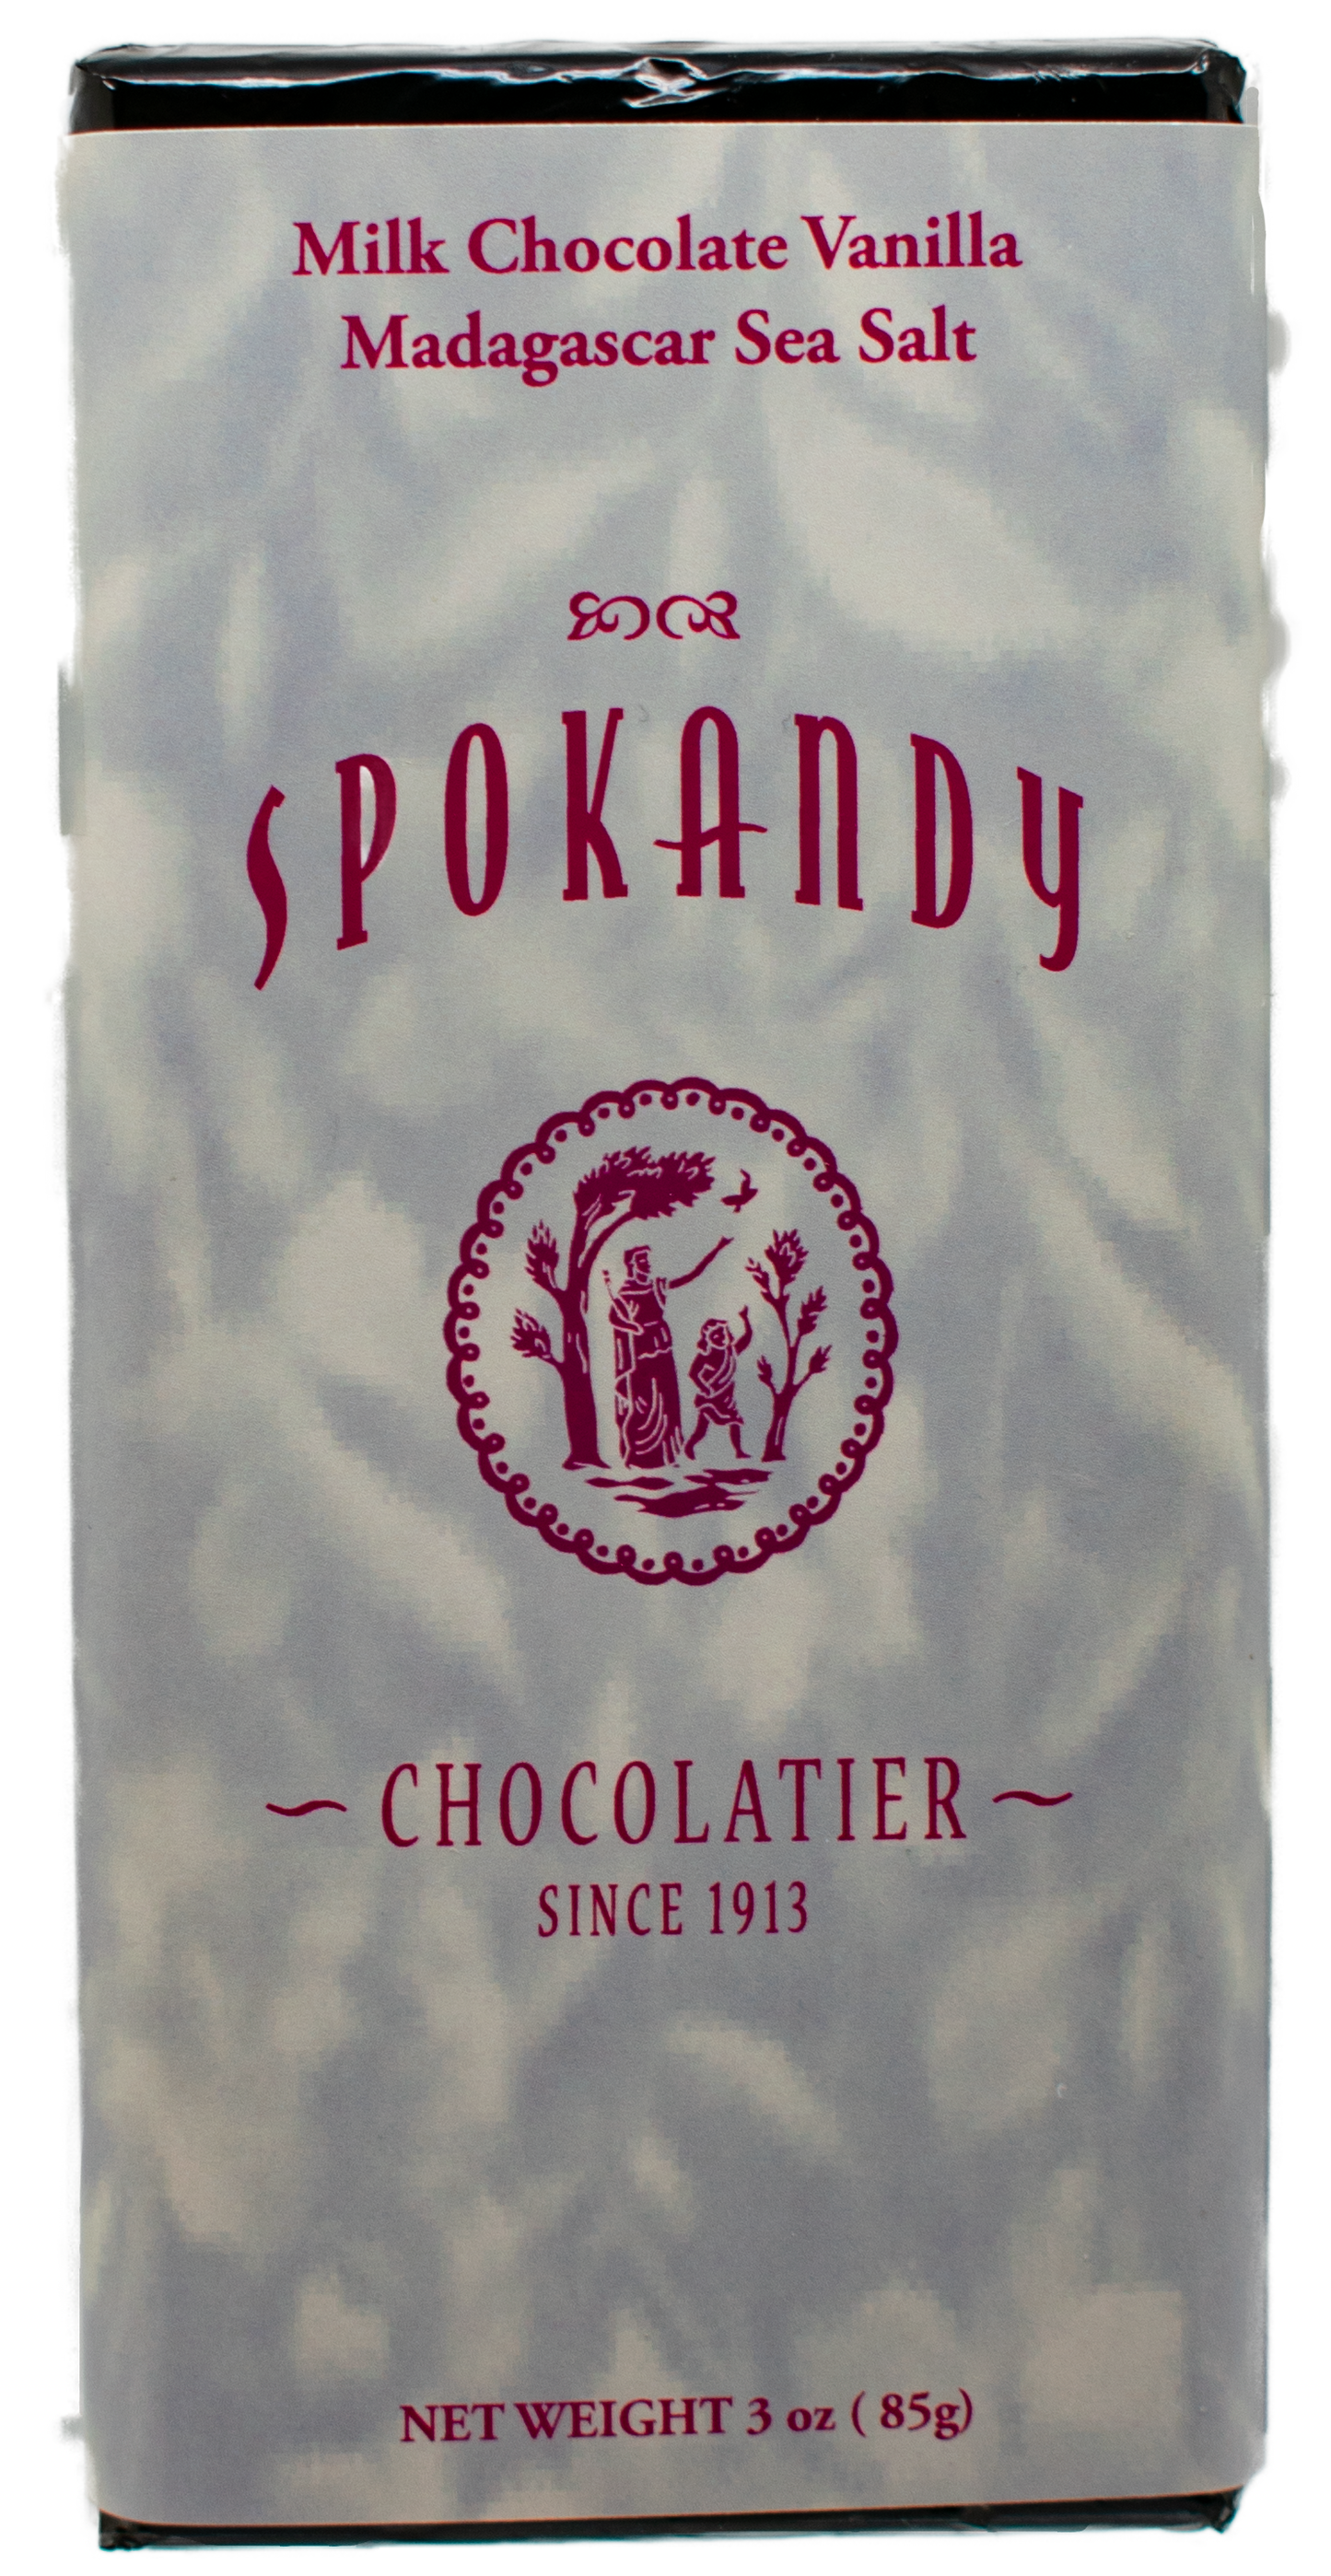 Spokandy Chocolatier - Madagascar Vanilla Sea Salt Milk Chocolate Bar